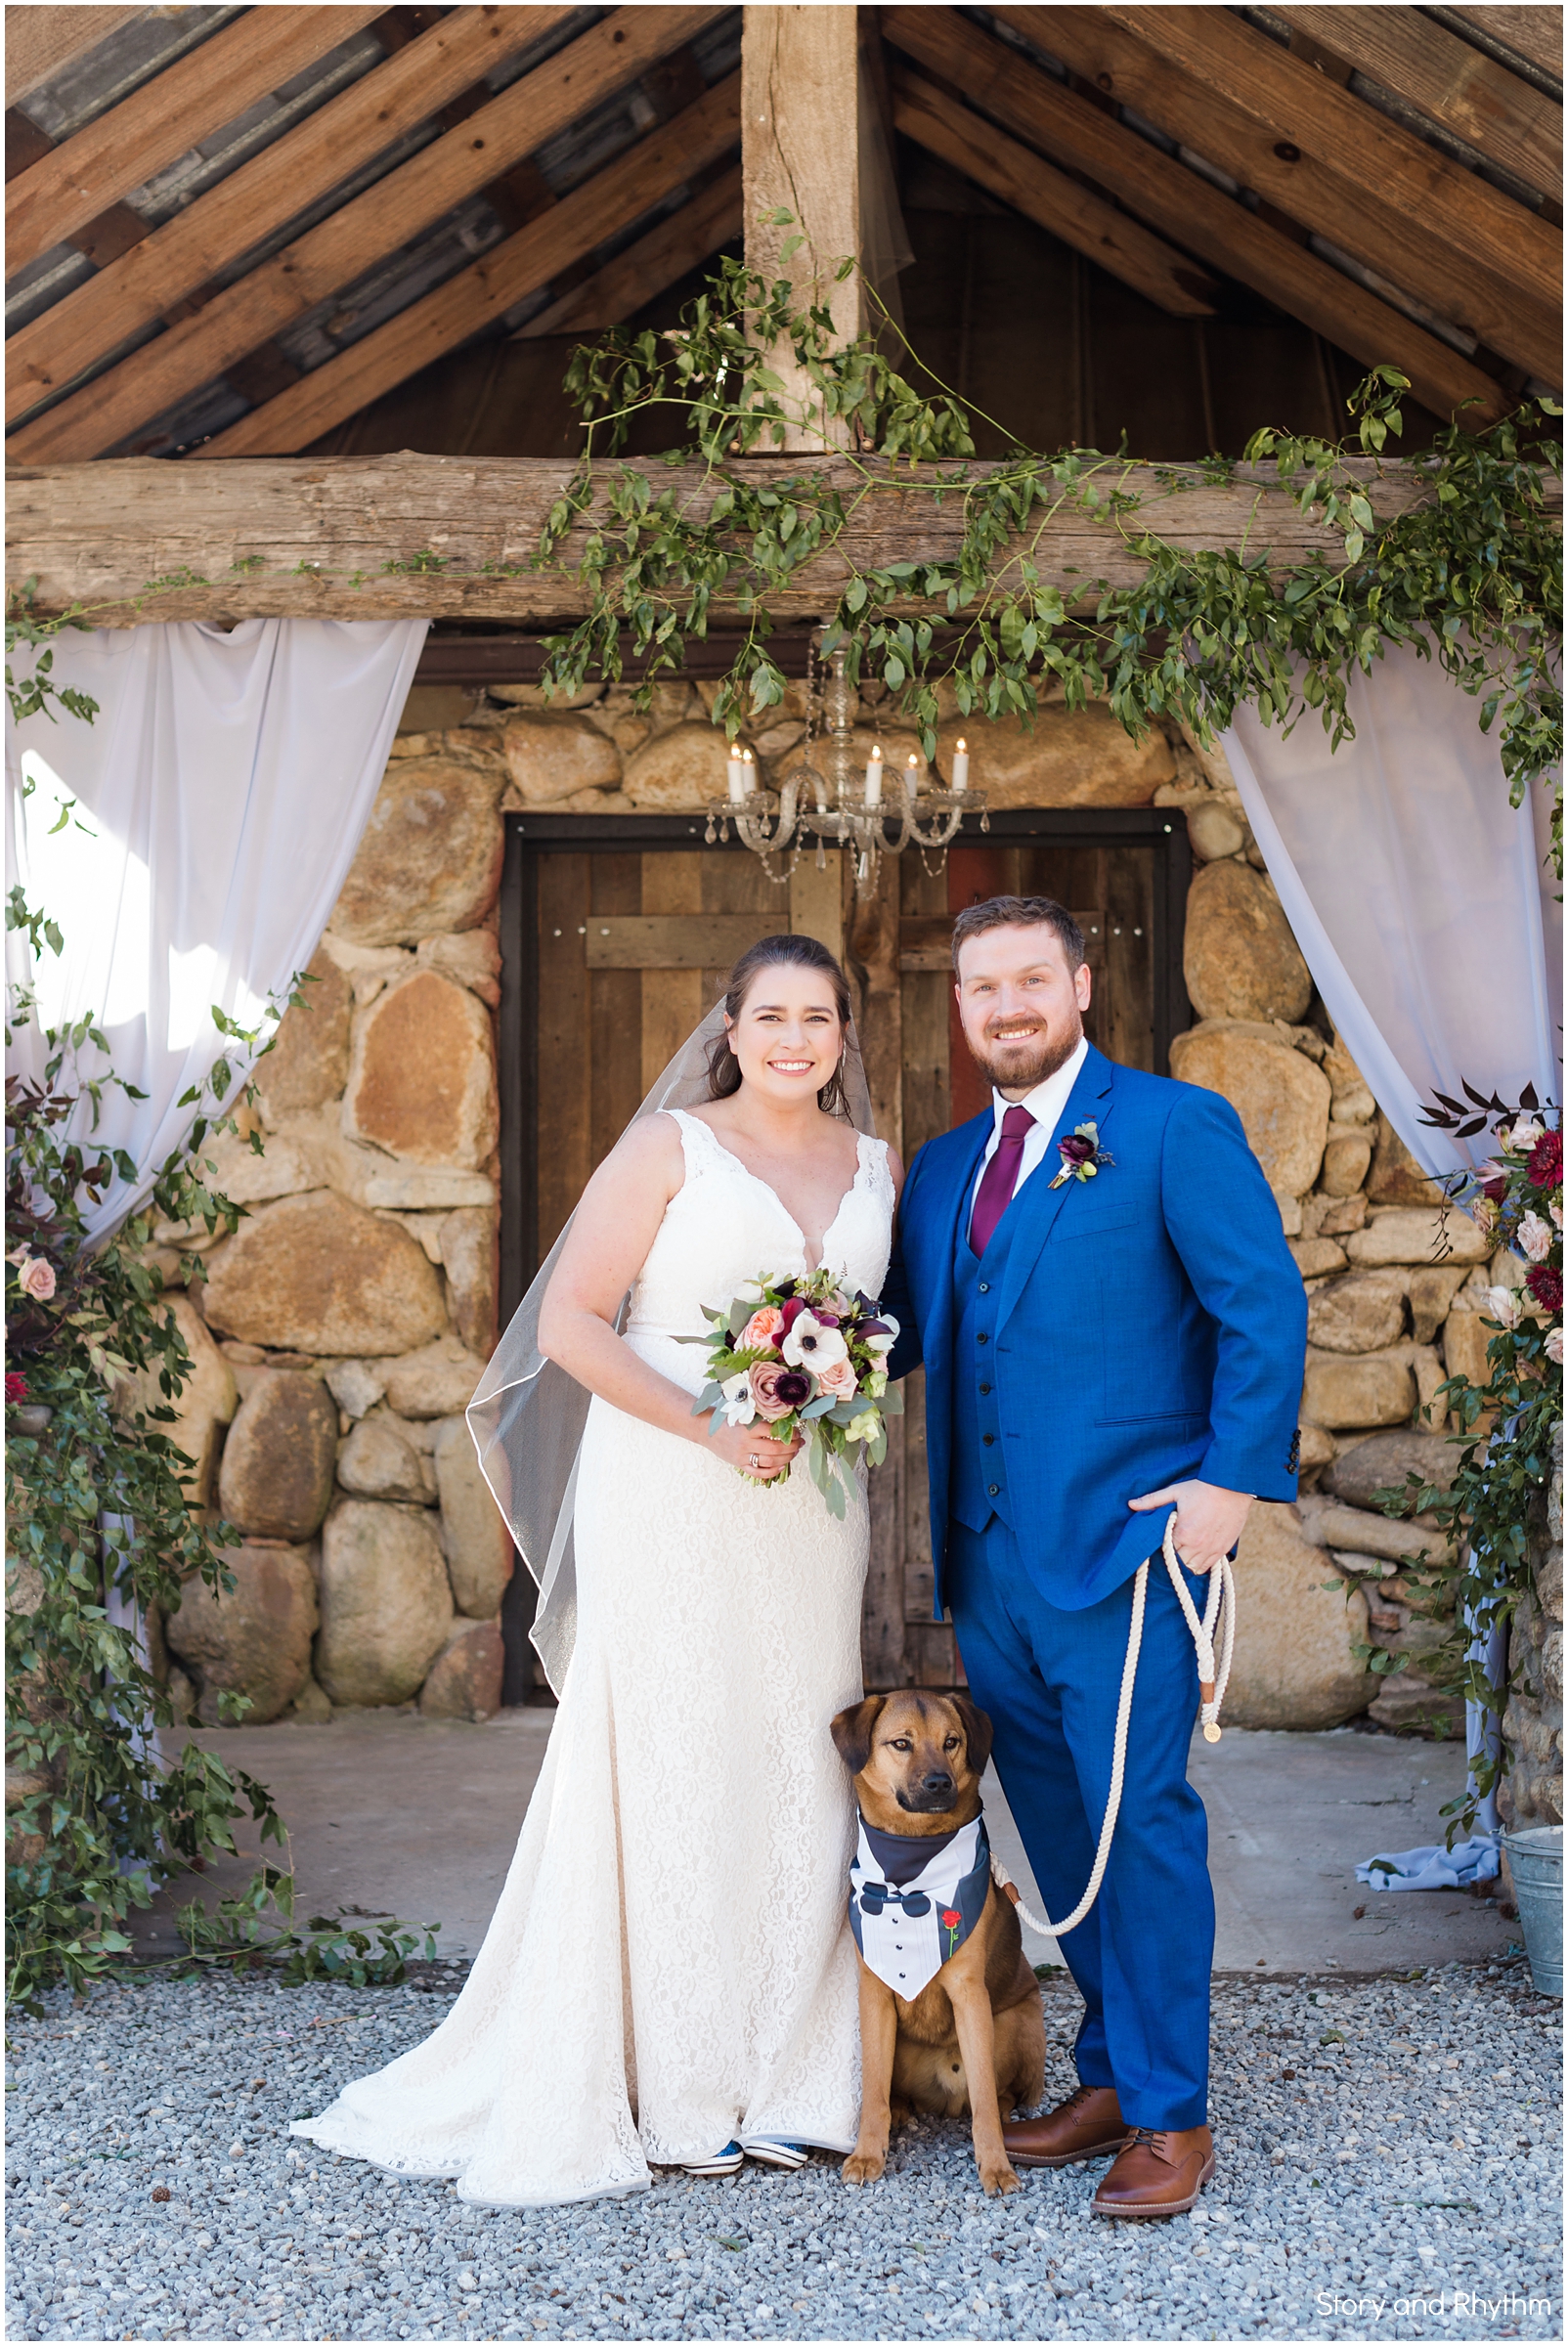 Wedding portraits with the dog